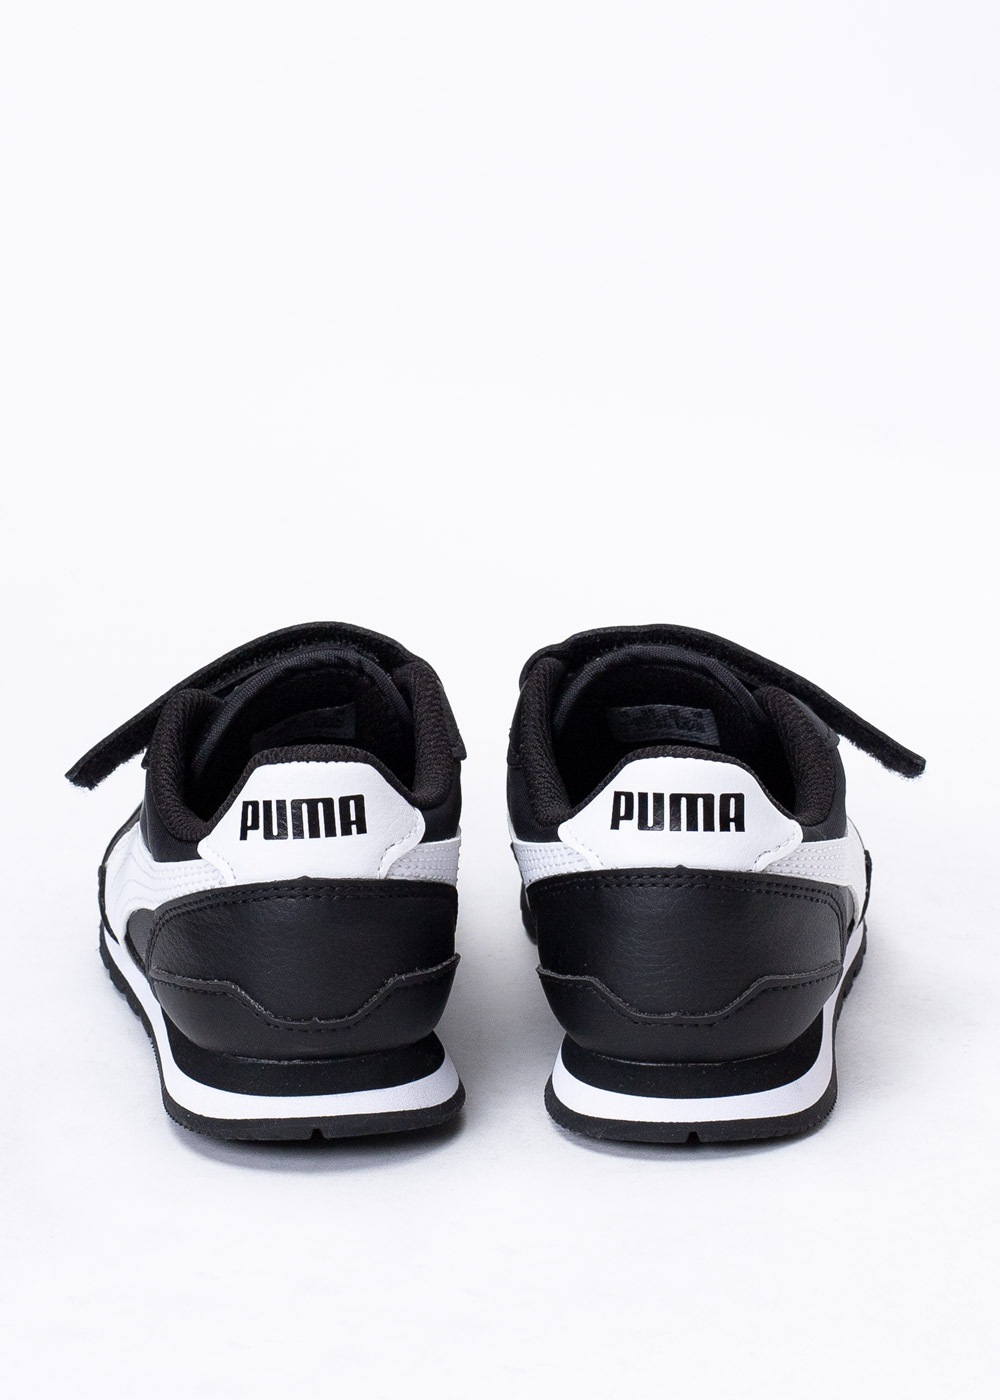 & ST Peeker Street, Größte V Lifestyle - Sneaker Schuhe, | 21,99 Schwarz Kinder Puma € v3 NL Sport, Sneaker Ps - Trekking, Runner Rabatte! - für Bekleidung Accessoires